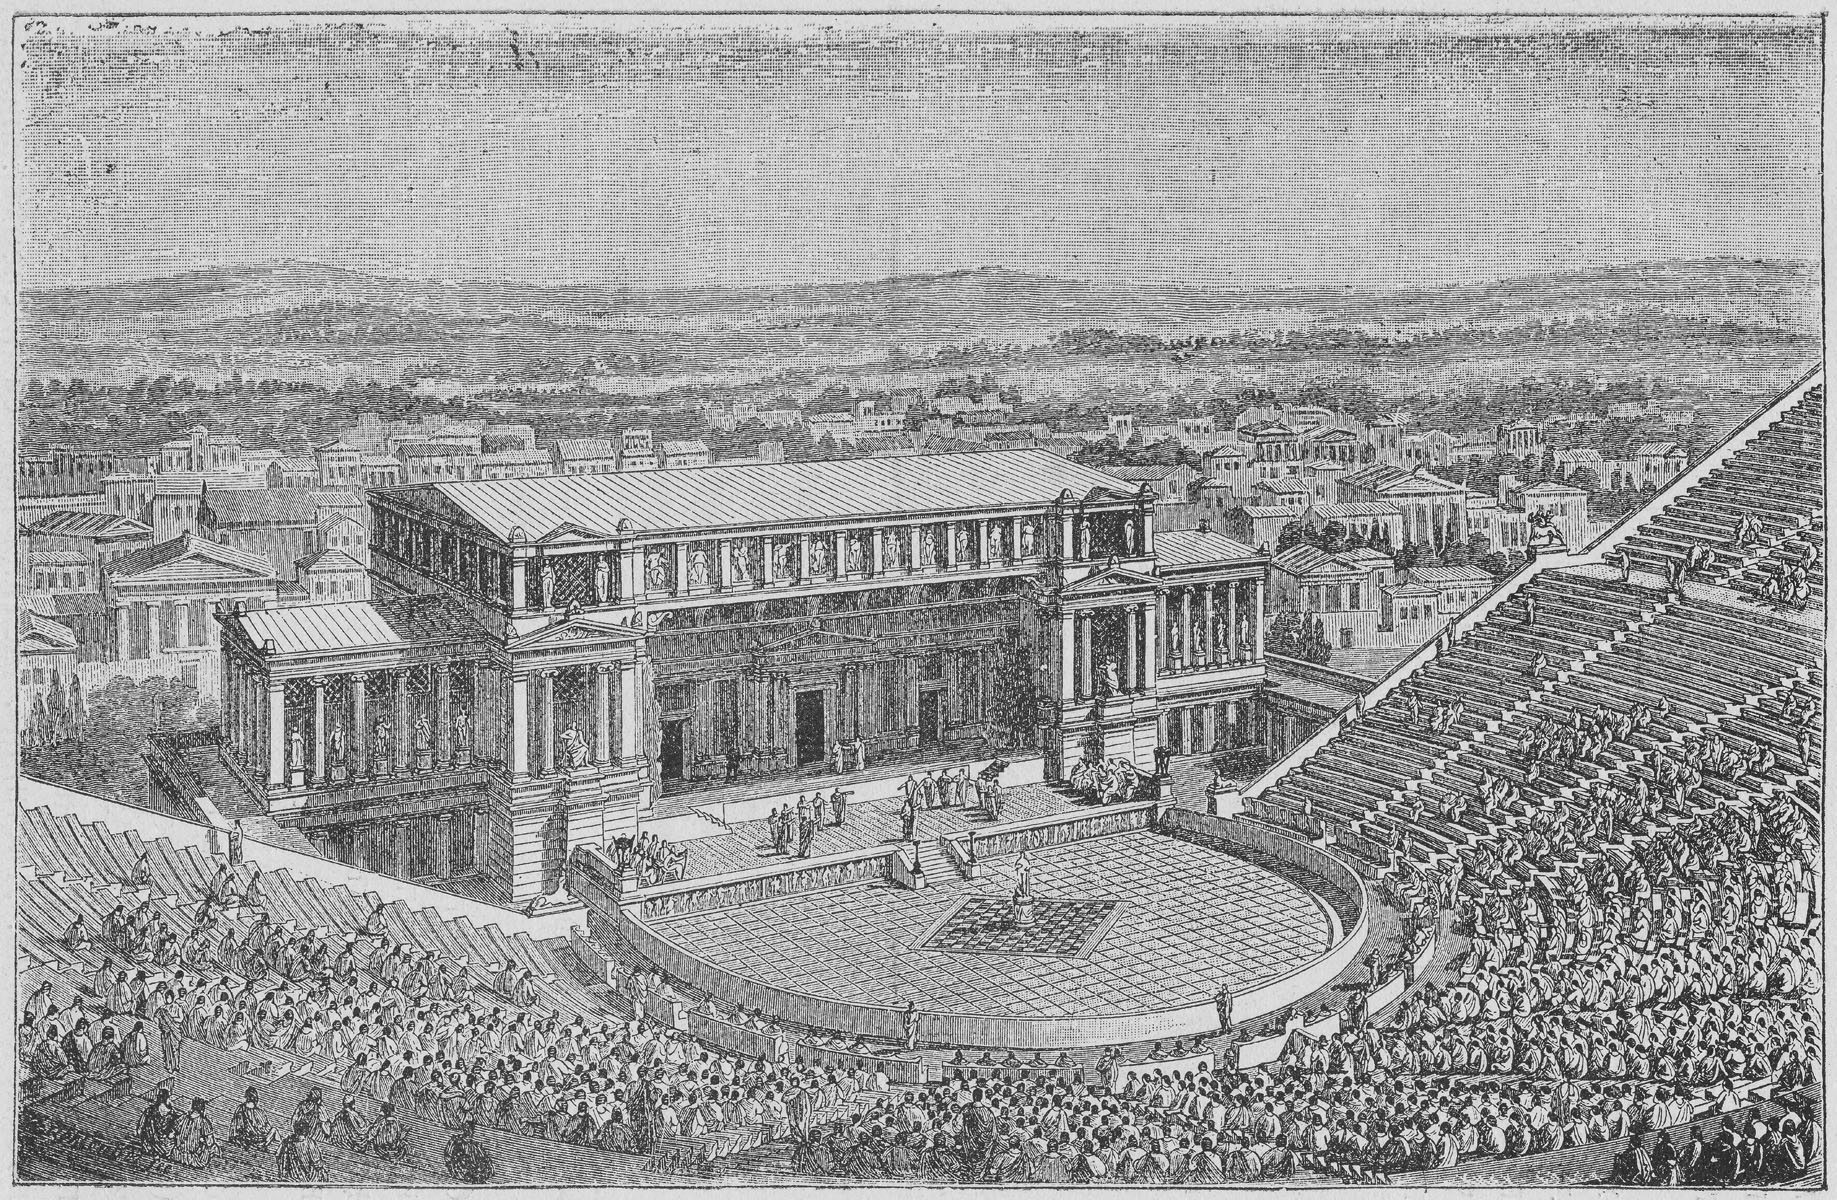 театр диониса в афинах